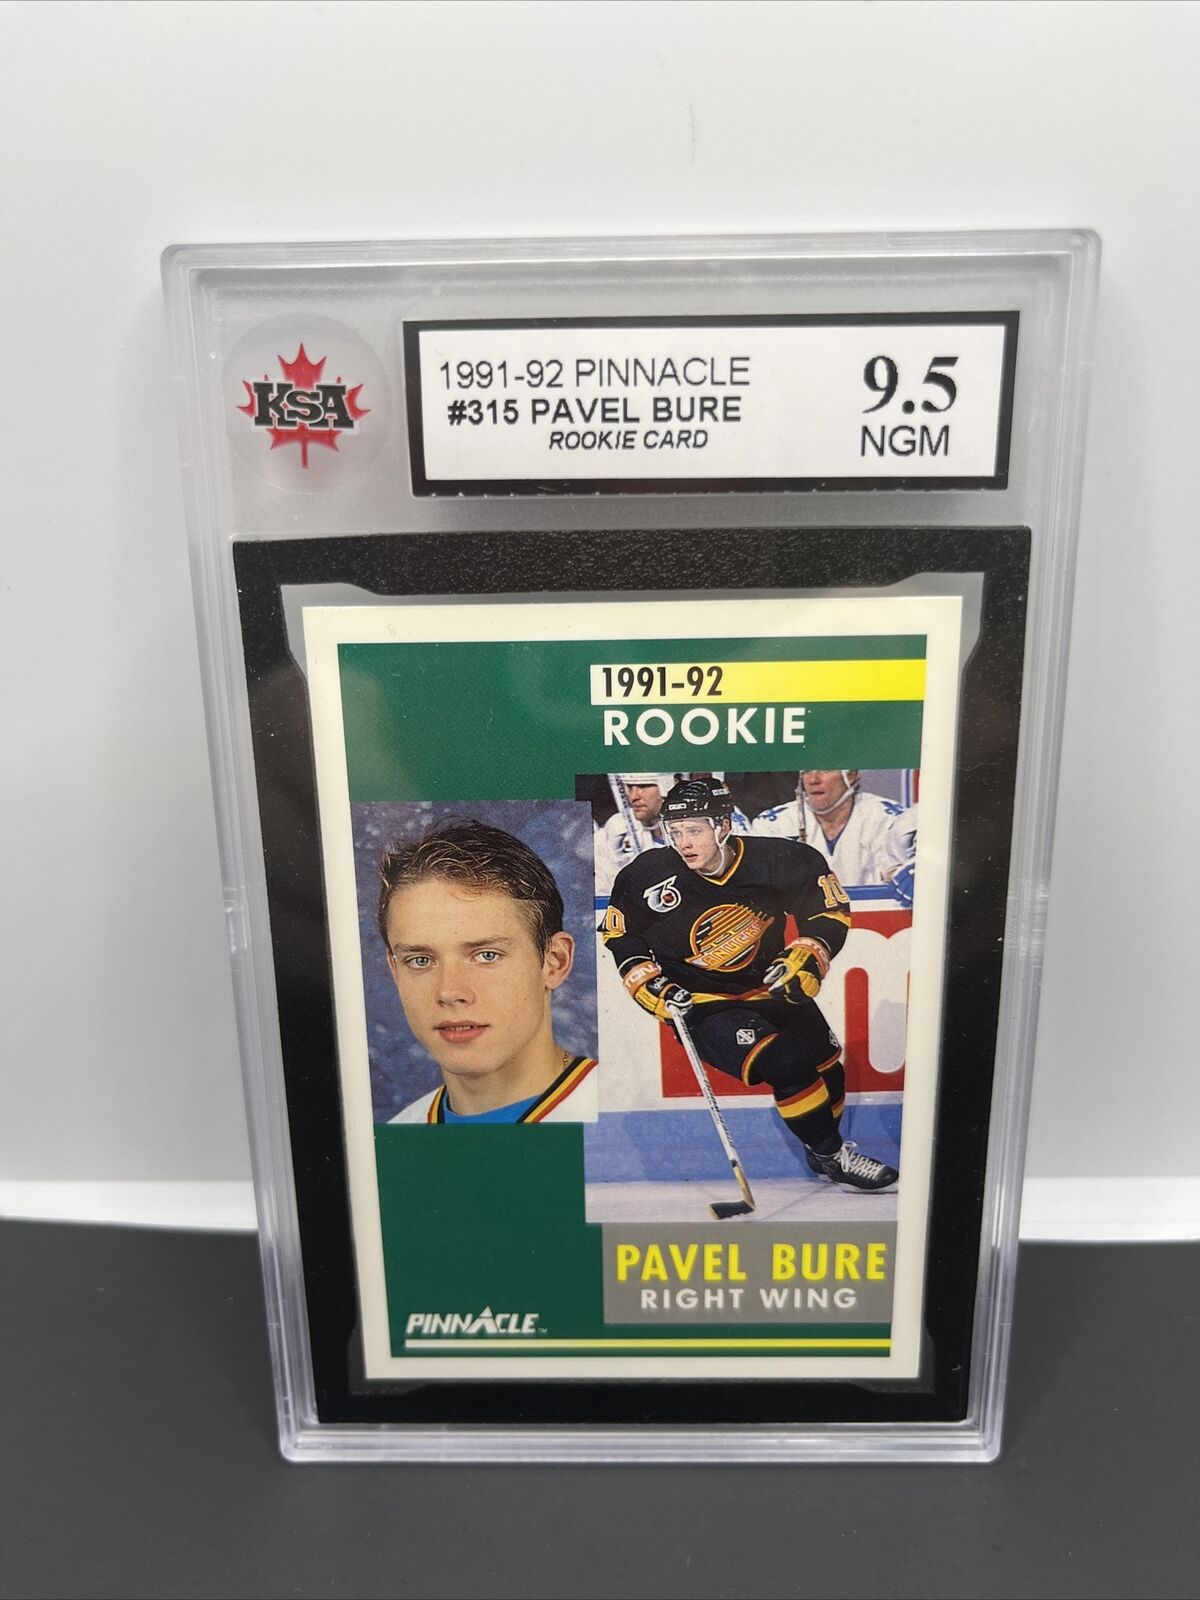 1991-92 Pinnacle Rookie Pavel Bure #315 KSA 9.5 NGM Vancouver Canucks 